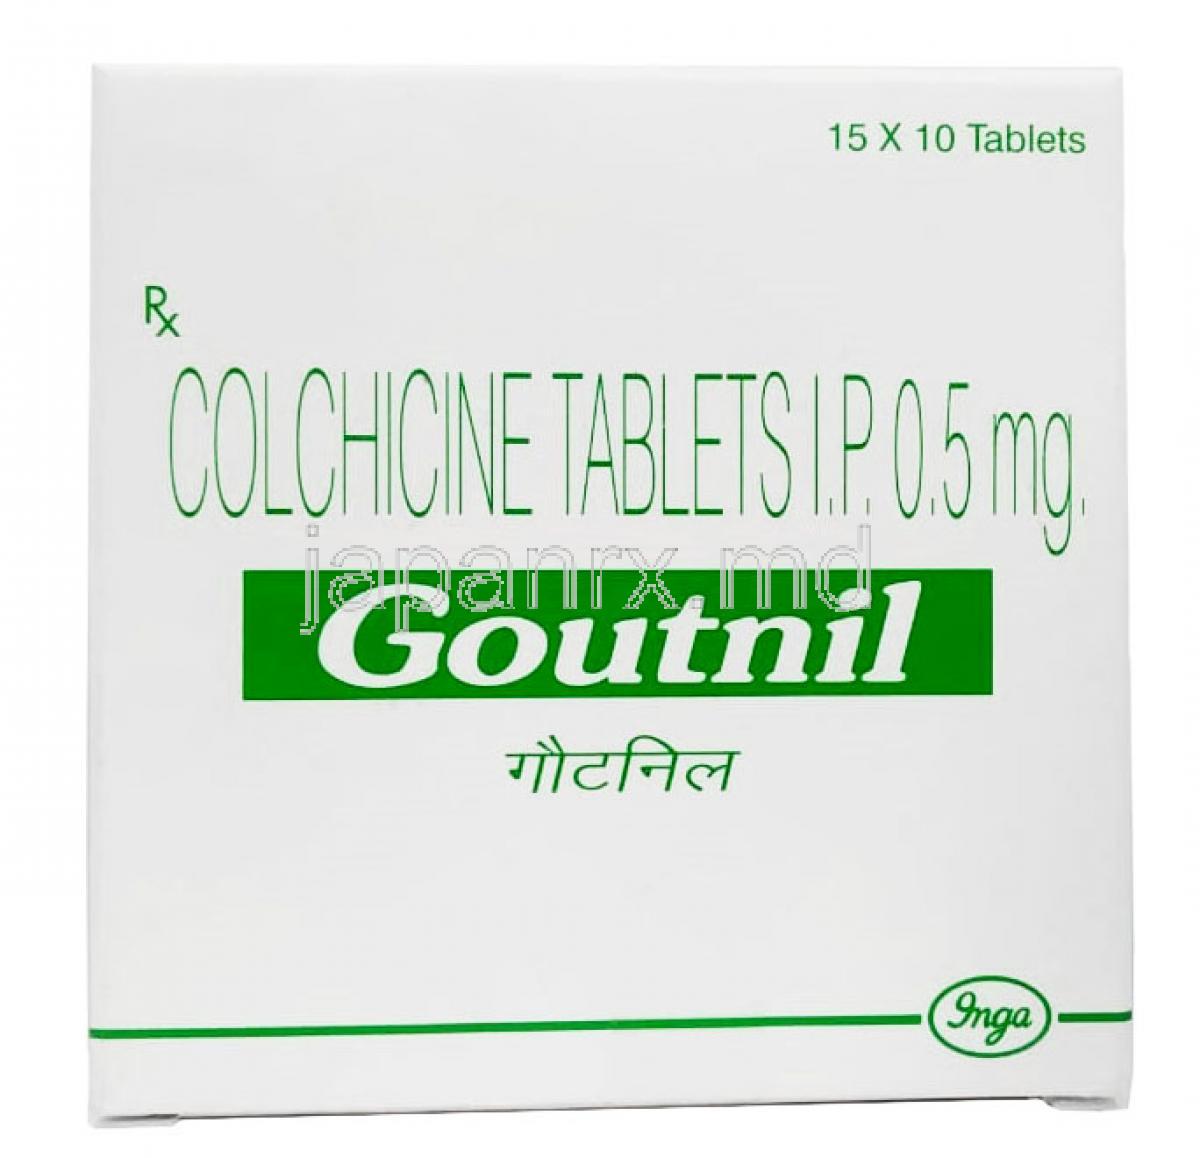 Goutnil, Colchicine 0.5mg, Inga Laboratories Pvt Ltd, Box front view